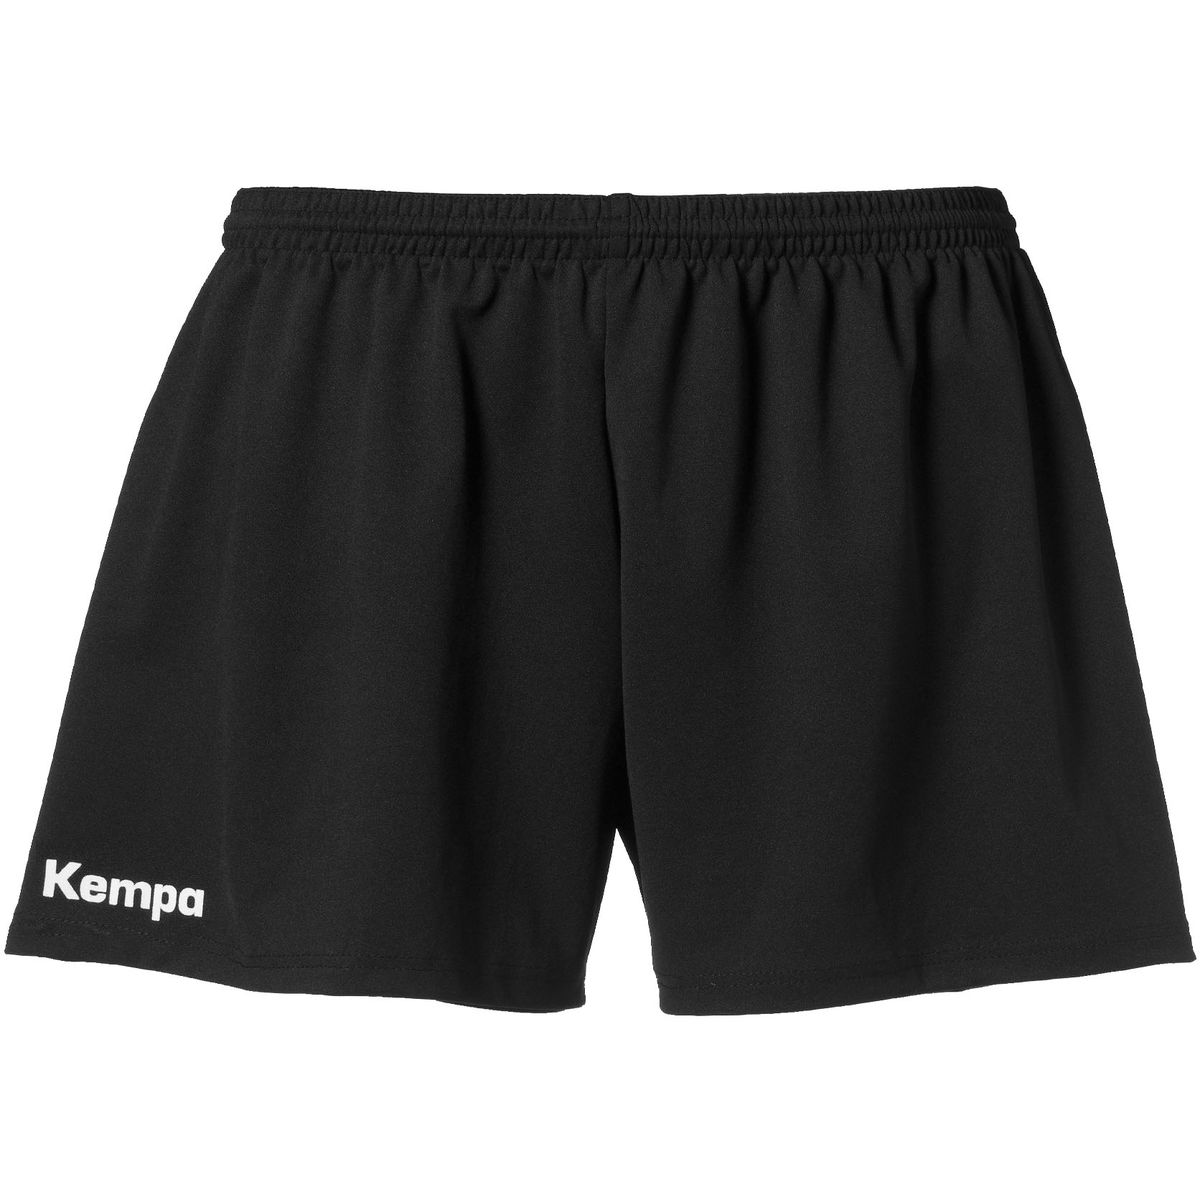 Kempa Classic Damen Teamhose